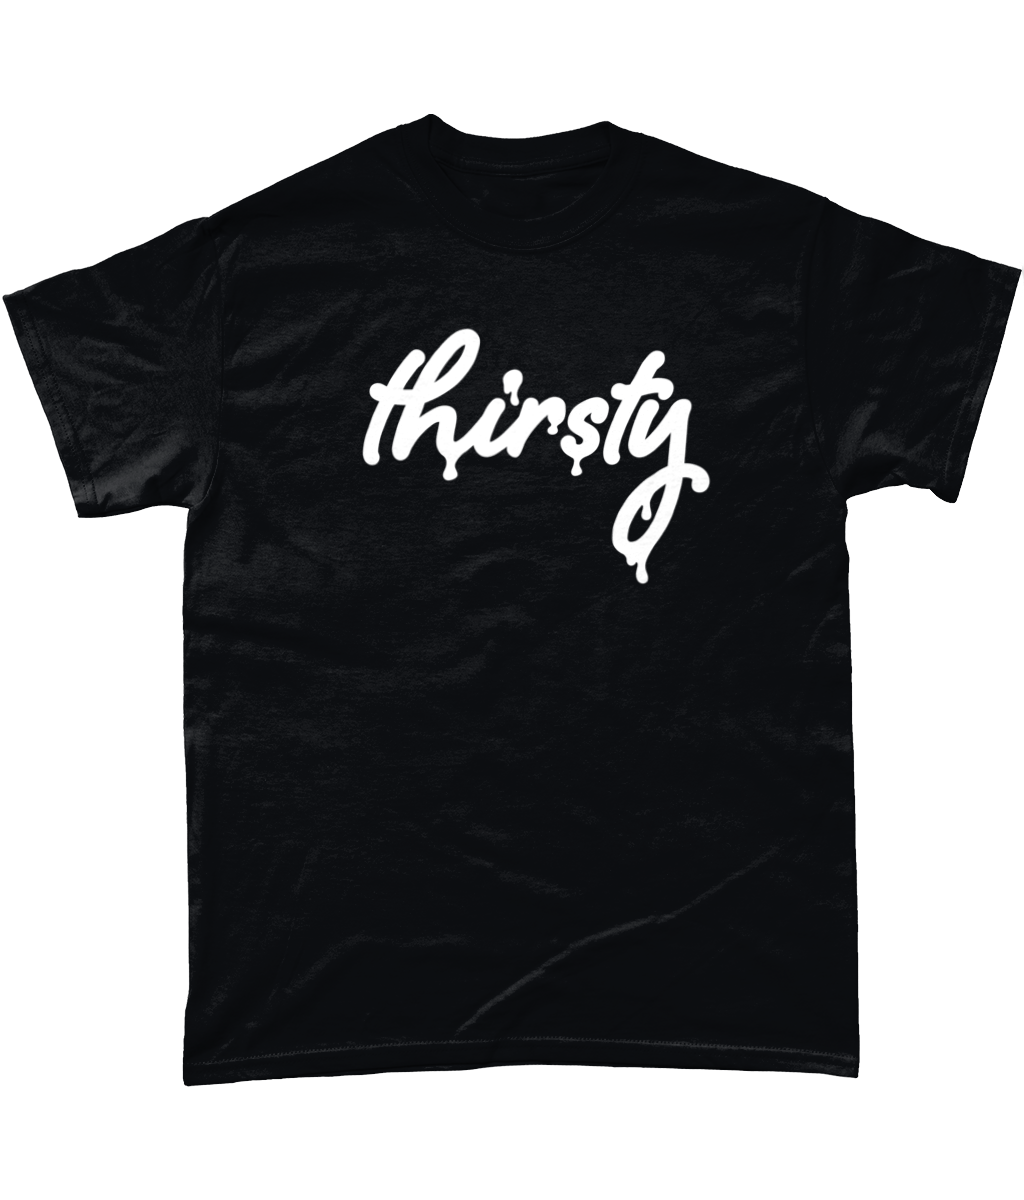 Thirsty T-shirt - SNATCHED MERCH